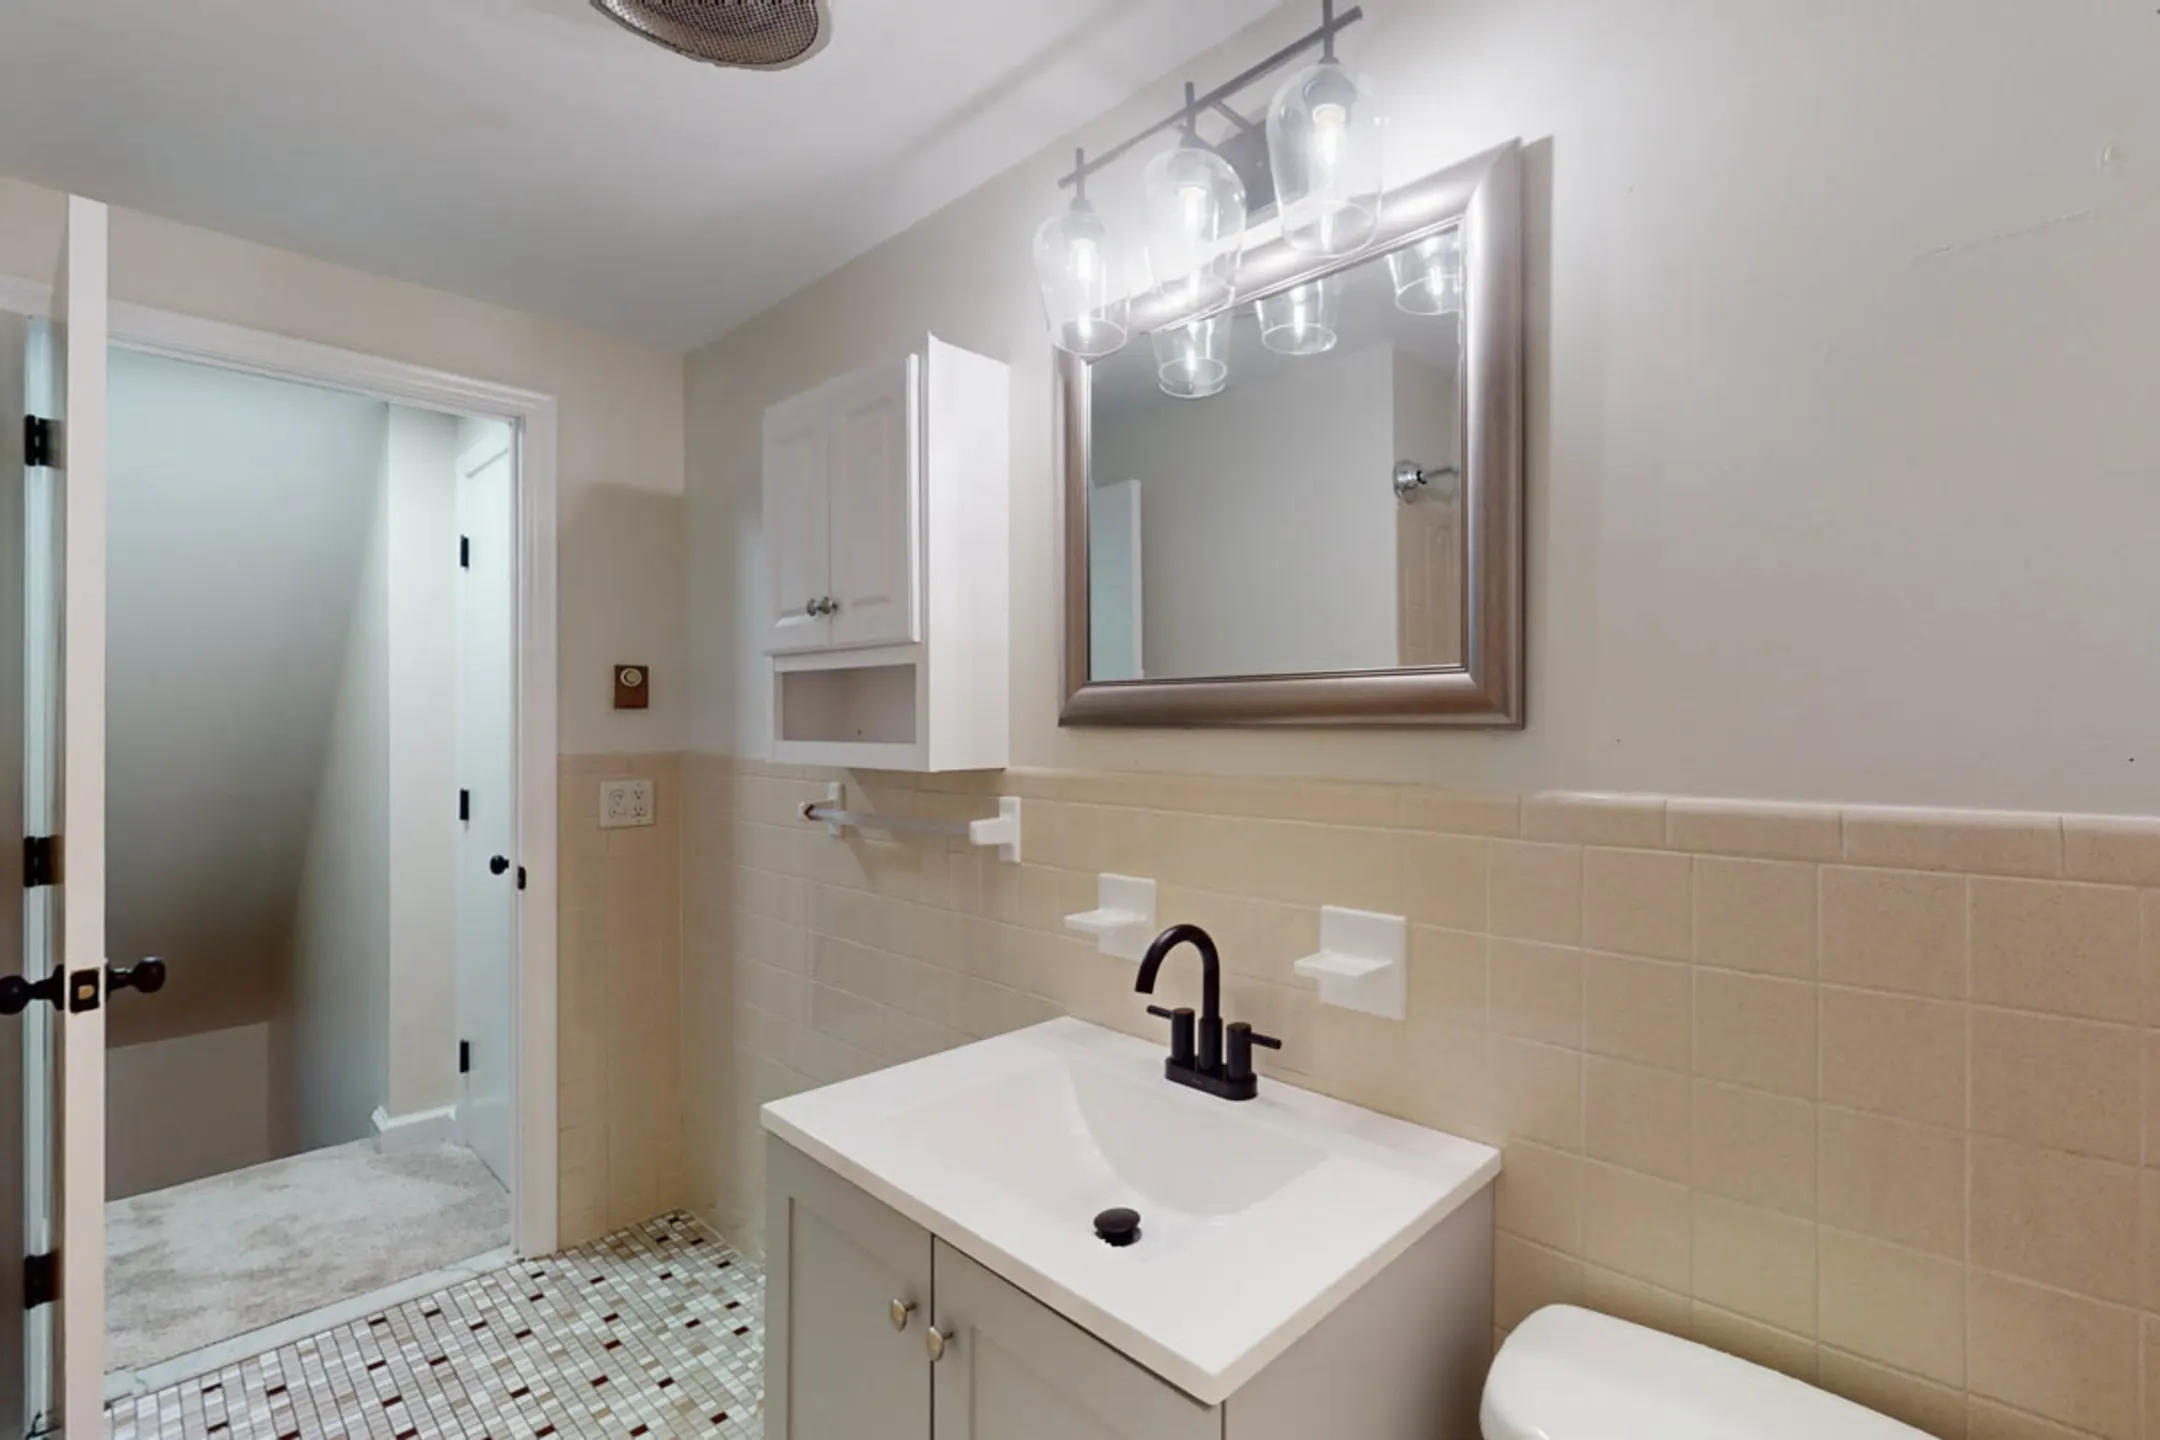 Bathroom - Pynchon Towne Houses - Agawam, MA